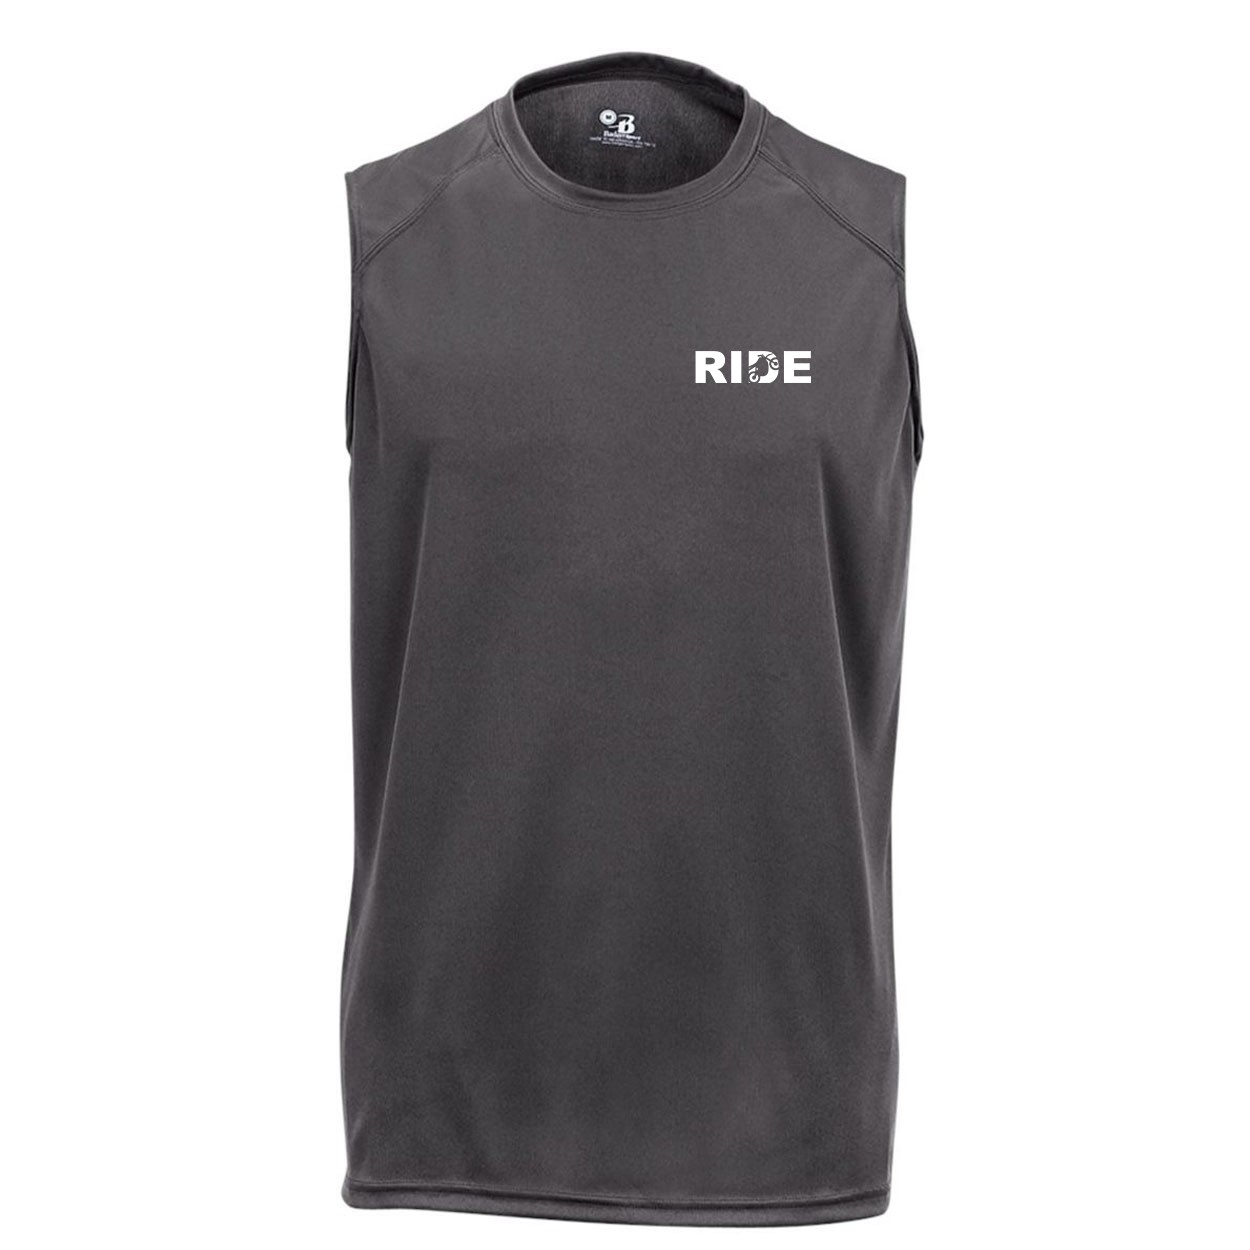 Ride Moto Logo Night Out Unisex Performance Sleeveless T-Shirt Graphite Gray (White Logo)